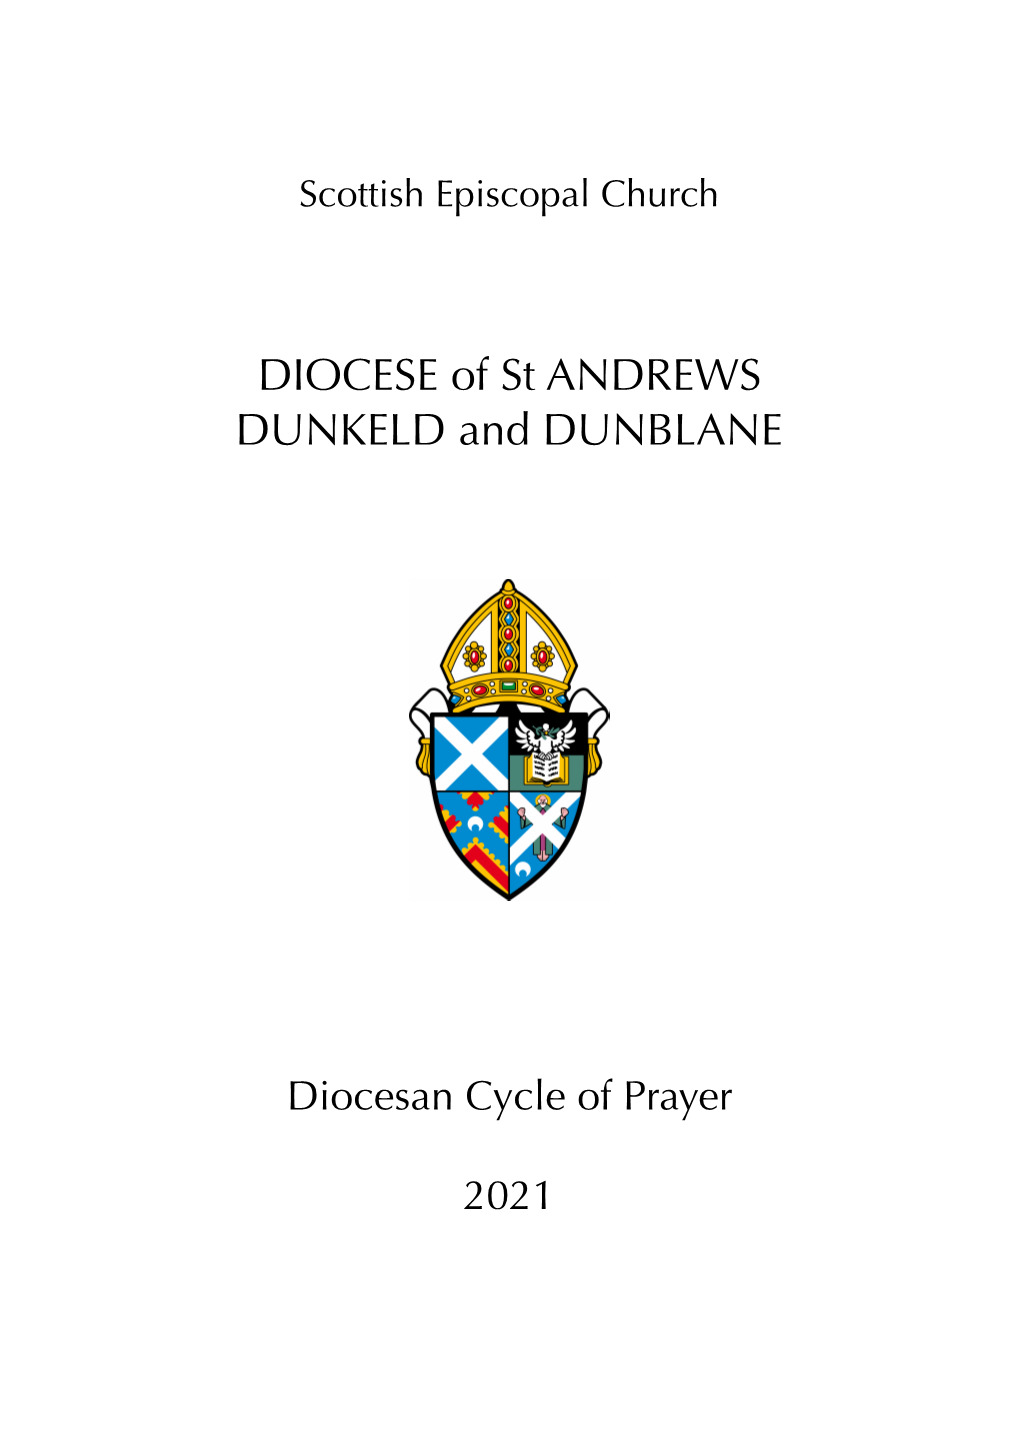 Diocesan Cycle of Prayer 2021